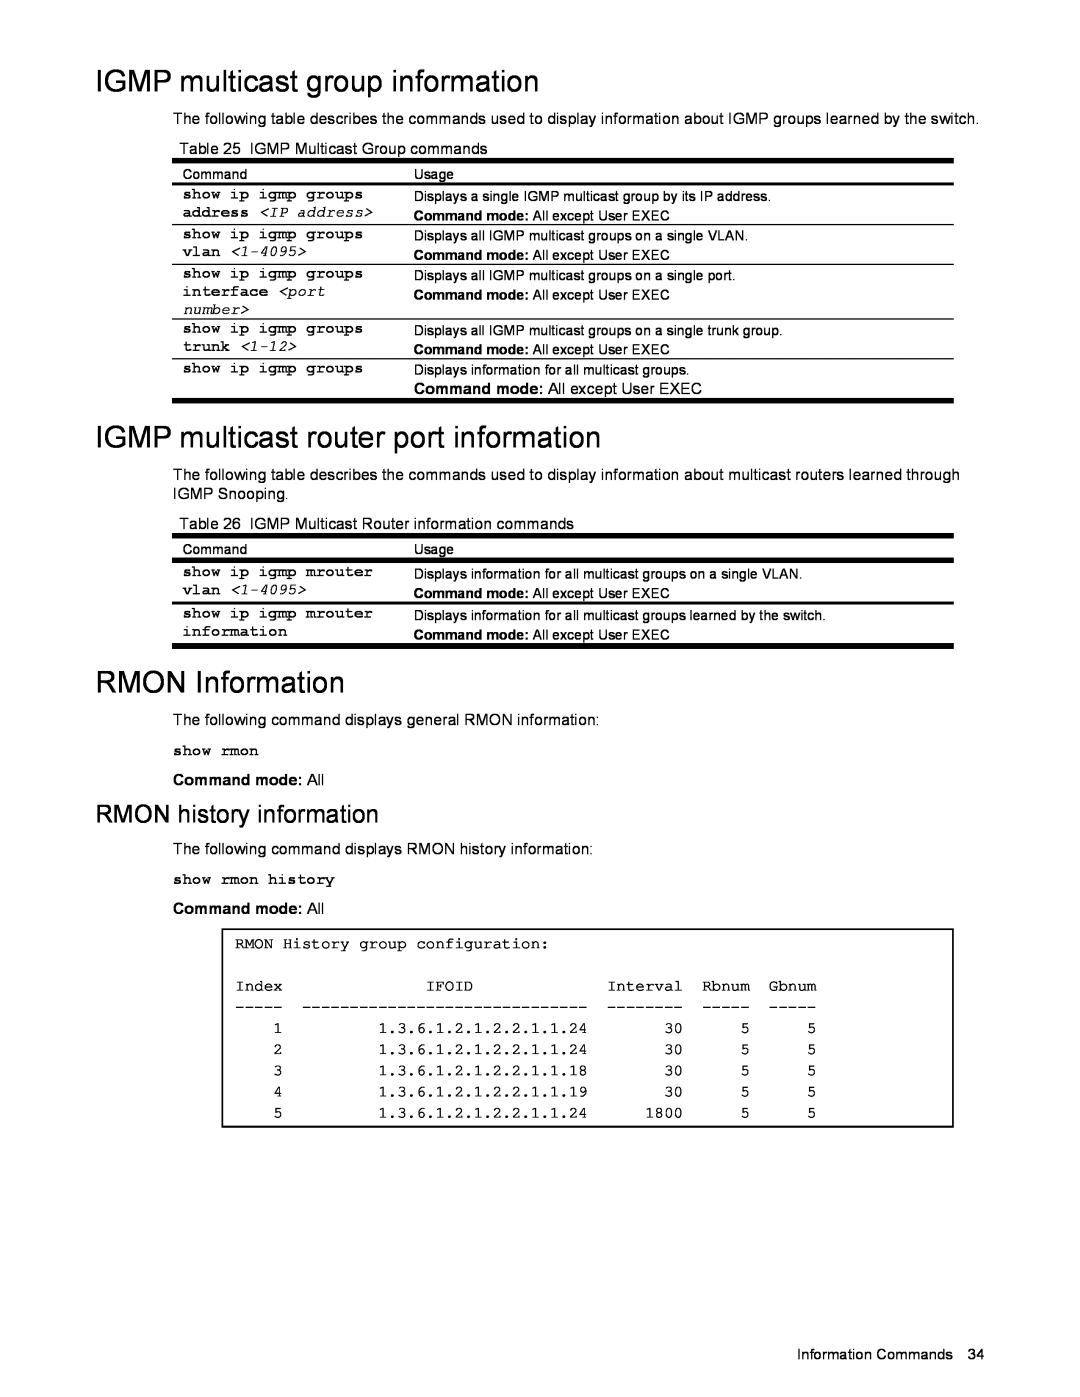 NEC N8406-022 IGMP multicast group information, IGMP multicast router port information, RMON Information, vlan <1-4095> 